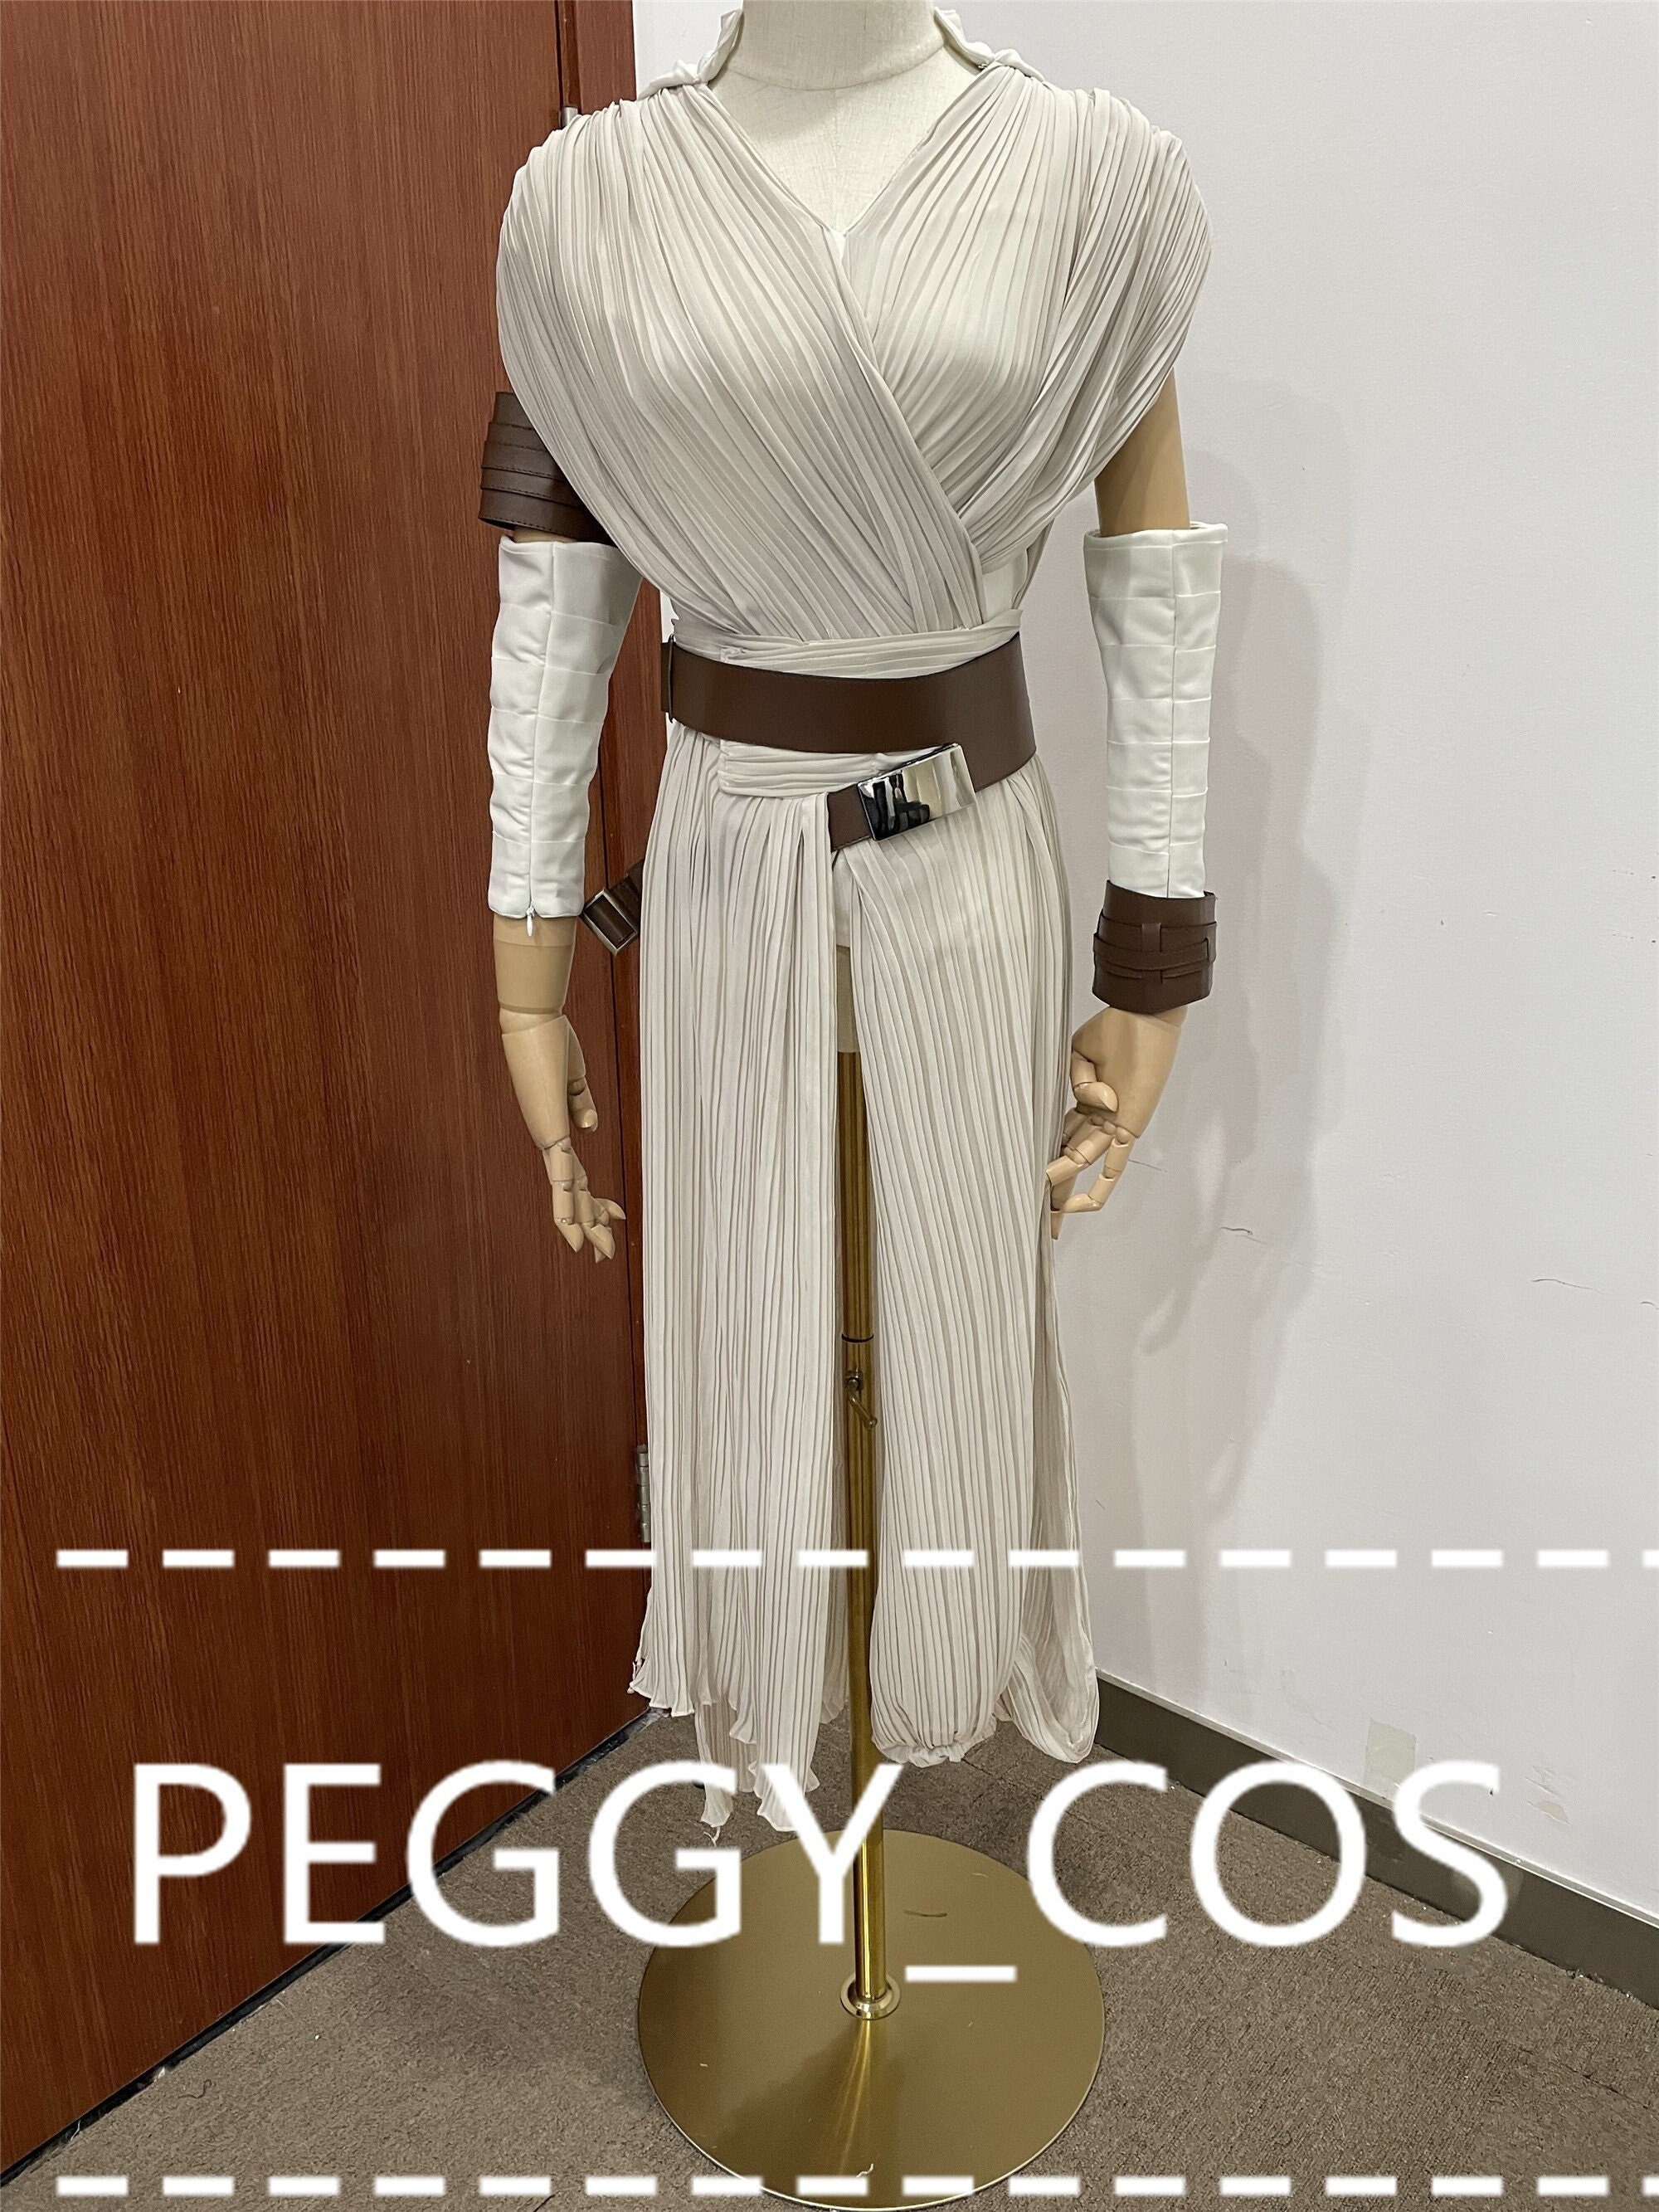 Star Wars 9 the Rise of Skywalker Rey Cosplay Costume Women 